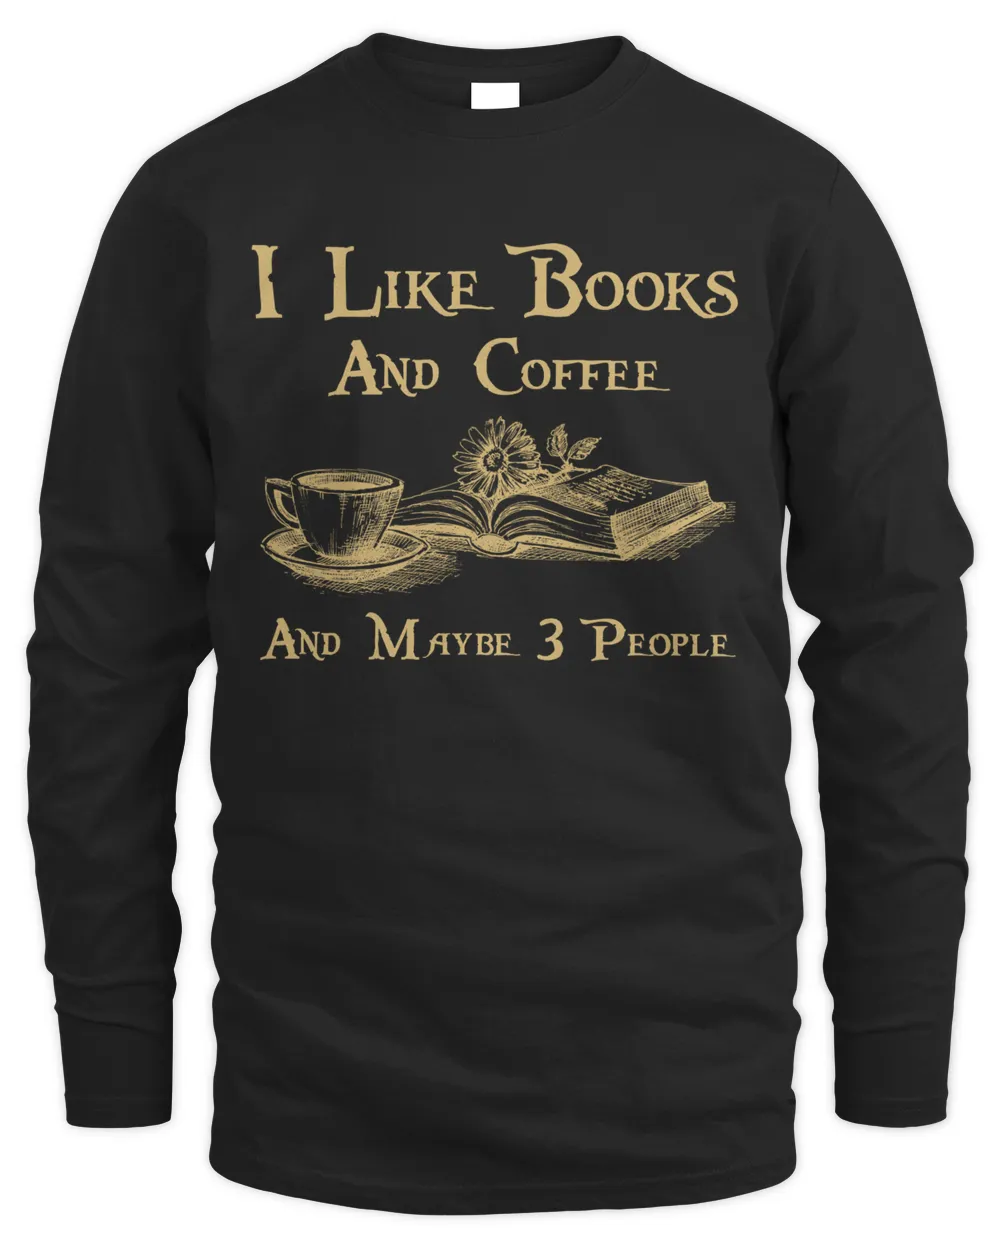 I like books coffee and maybe 3 people